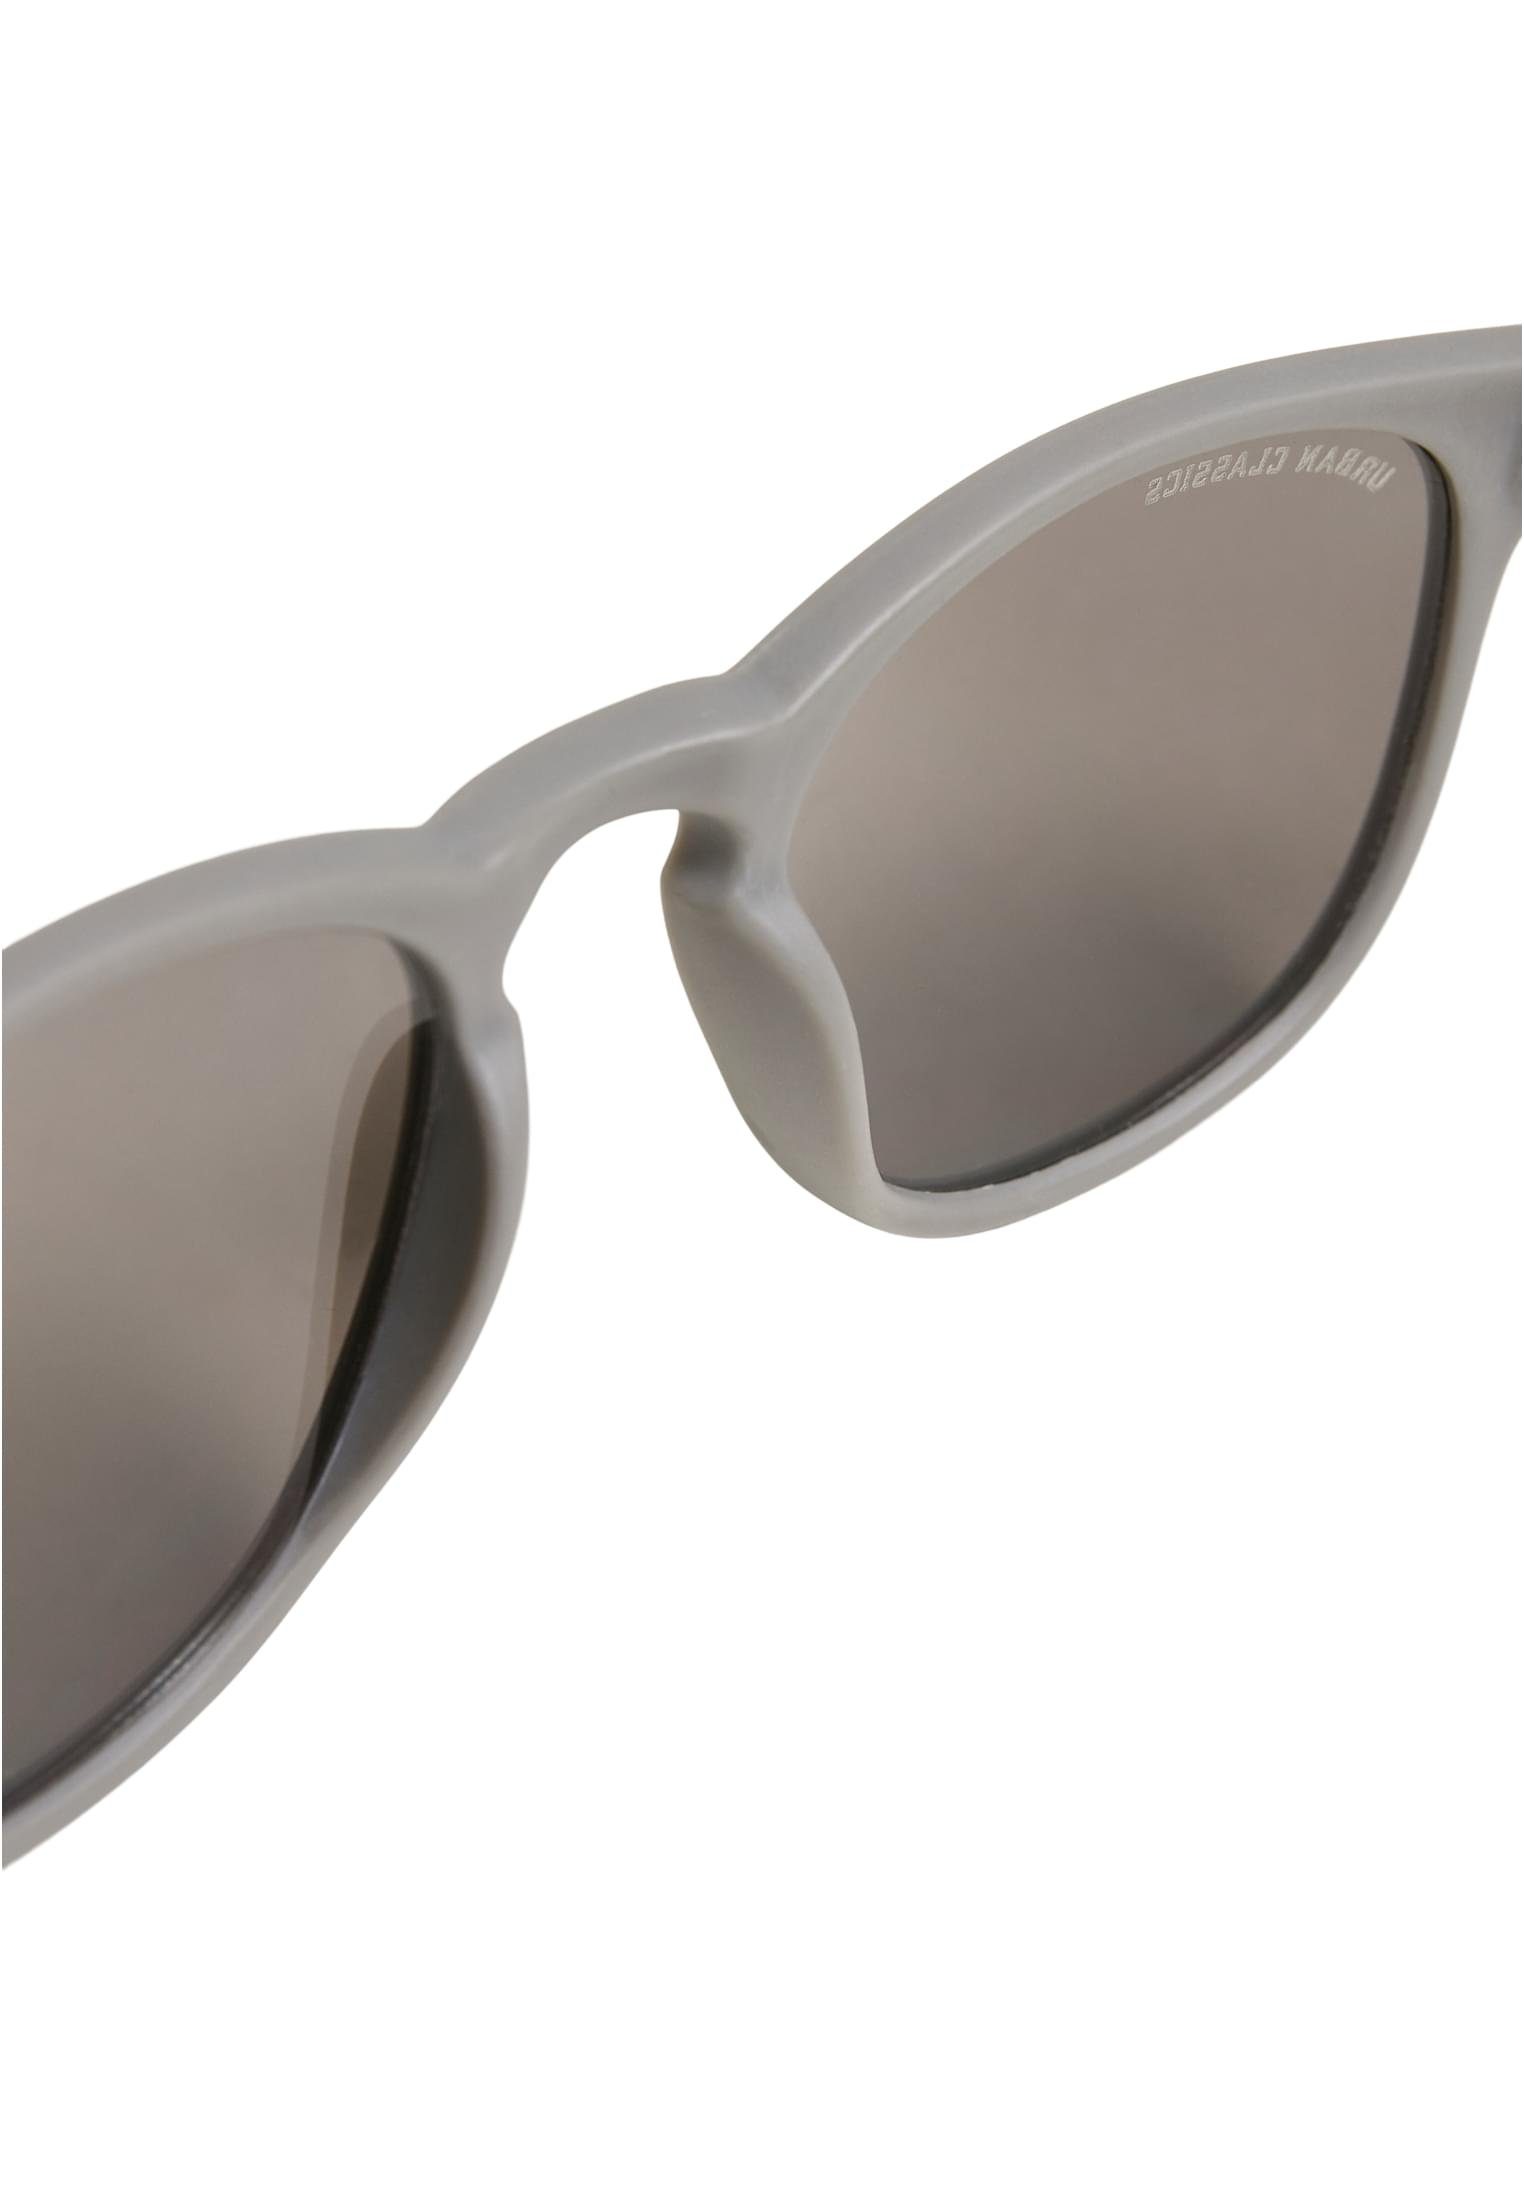 Unisex Sonnenbrille Sunglasses Chain CLASSICS Arthur grey/silver URBAN with